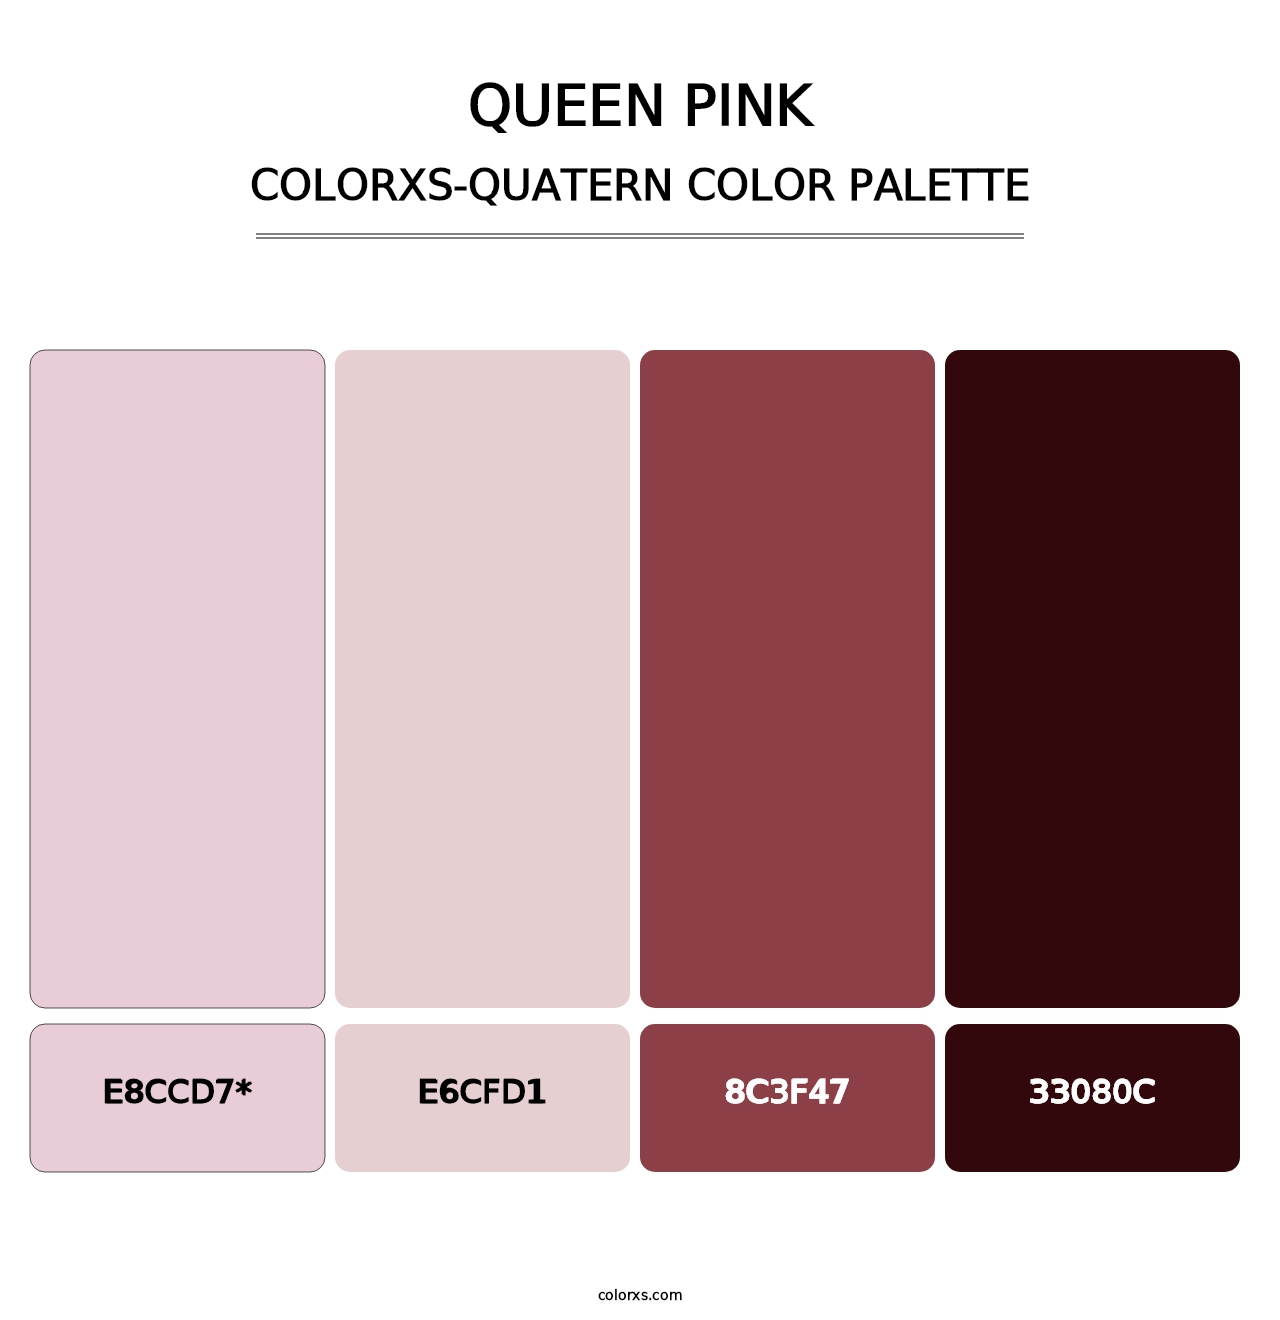 Queen Pink - Colorxs Quatern Palette